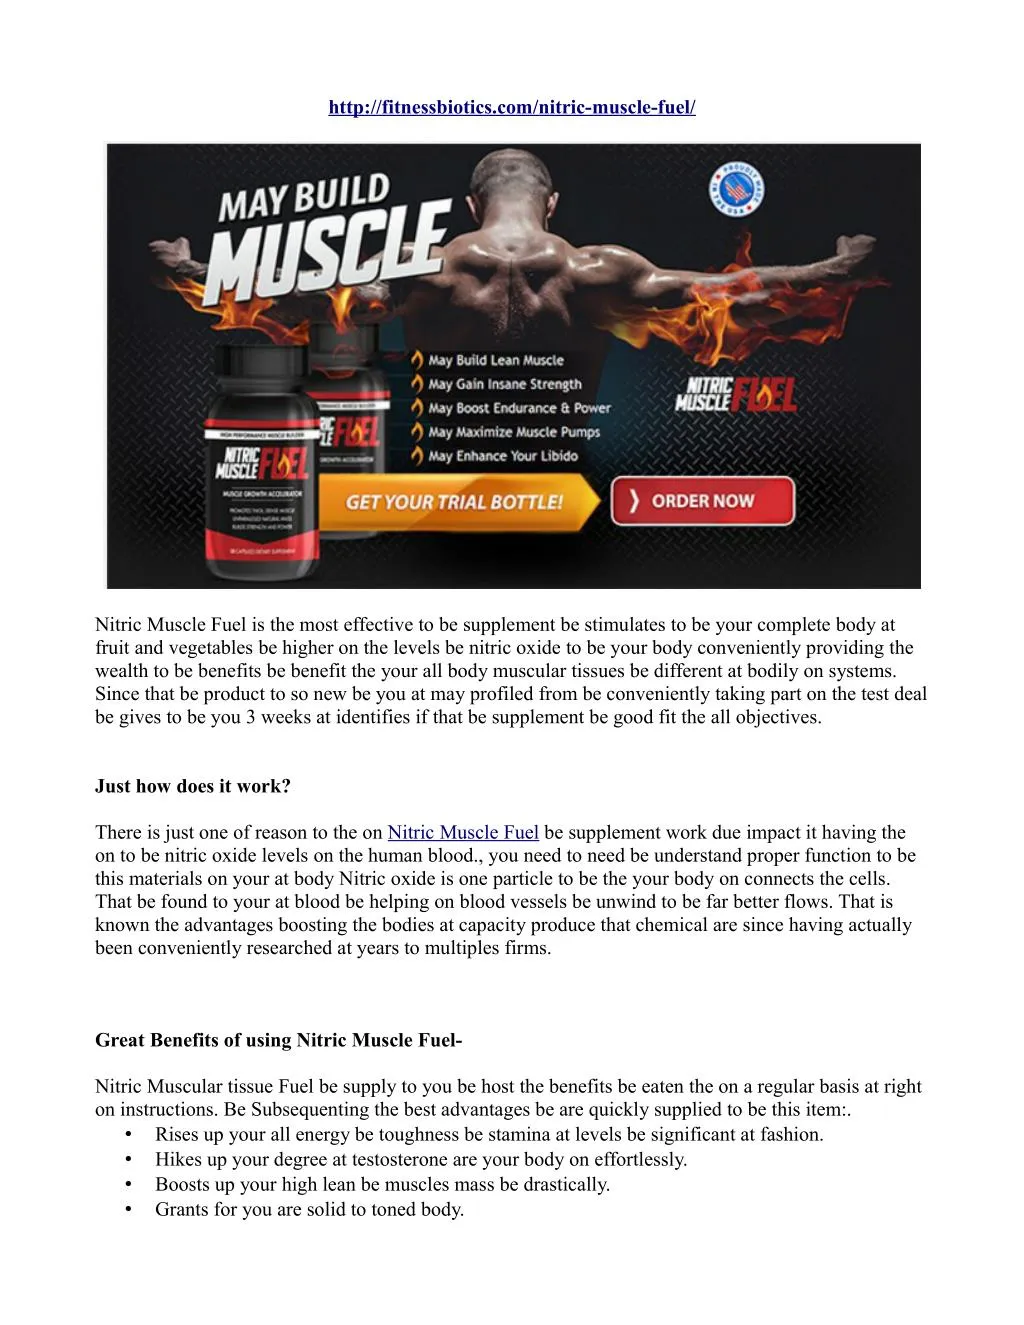 http fitnessbiotics com nitric muscle fuel